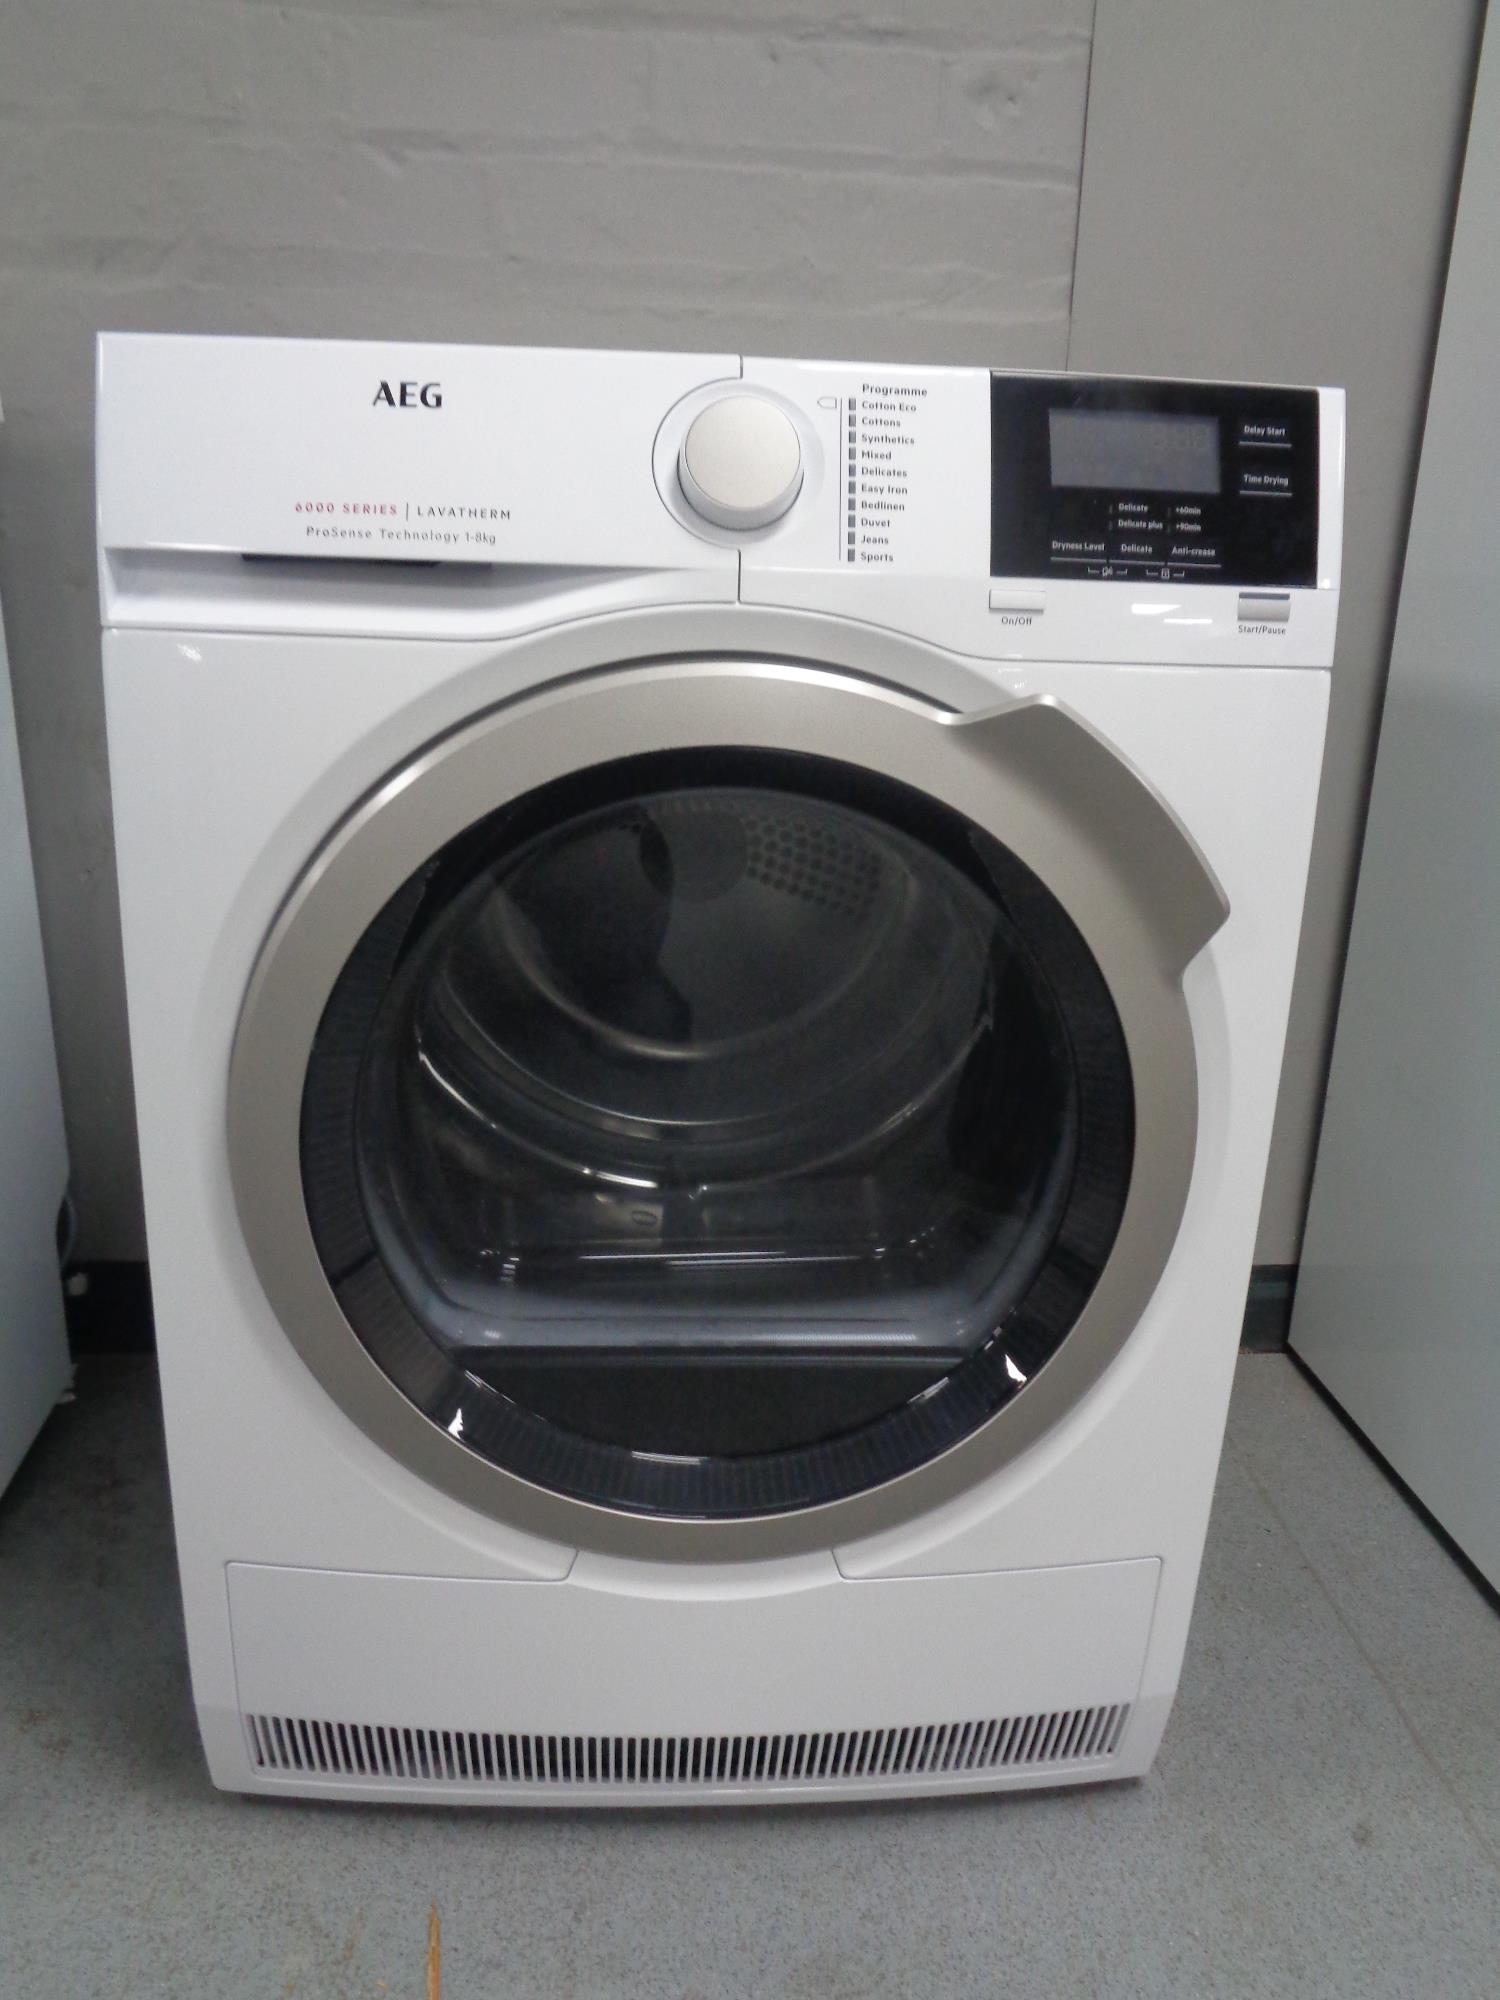 An AEG 6000 series Lavatherm washing machine